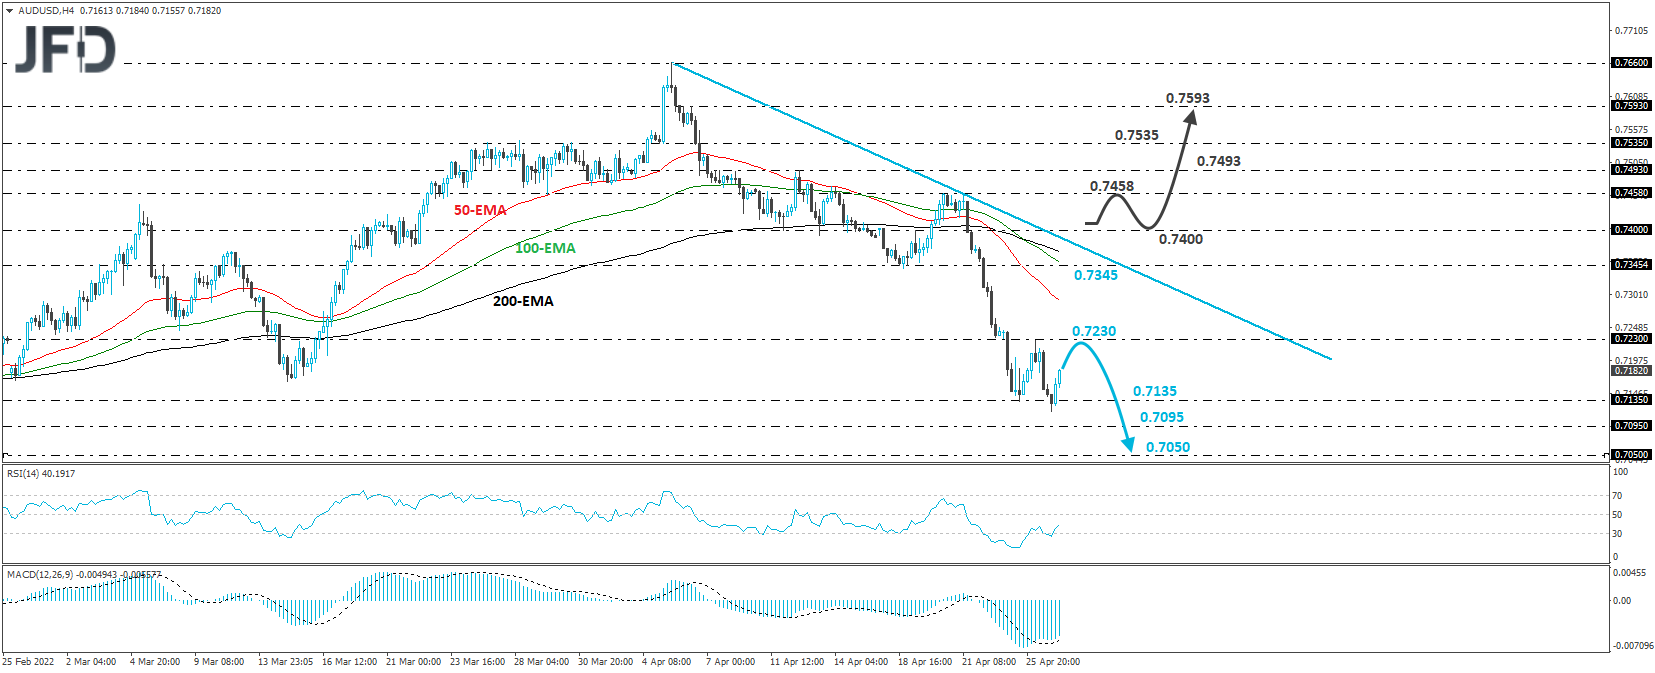 AUD/USD 4-hour chart technical analysis.